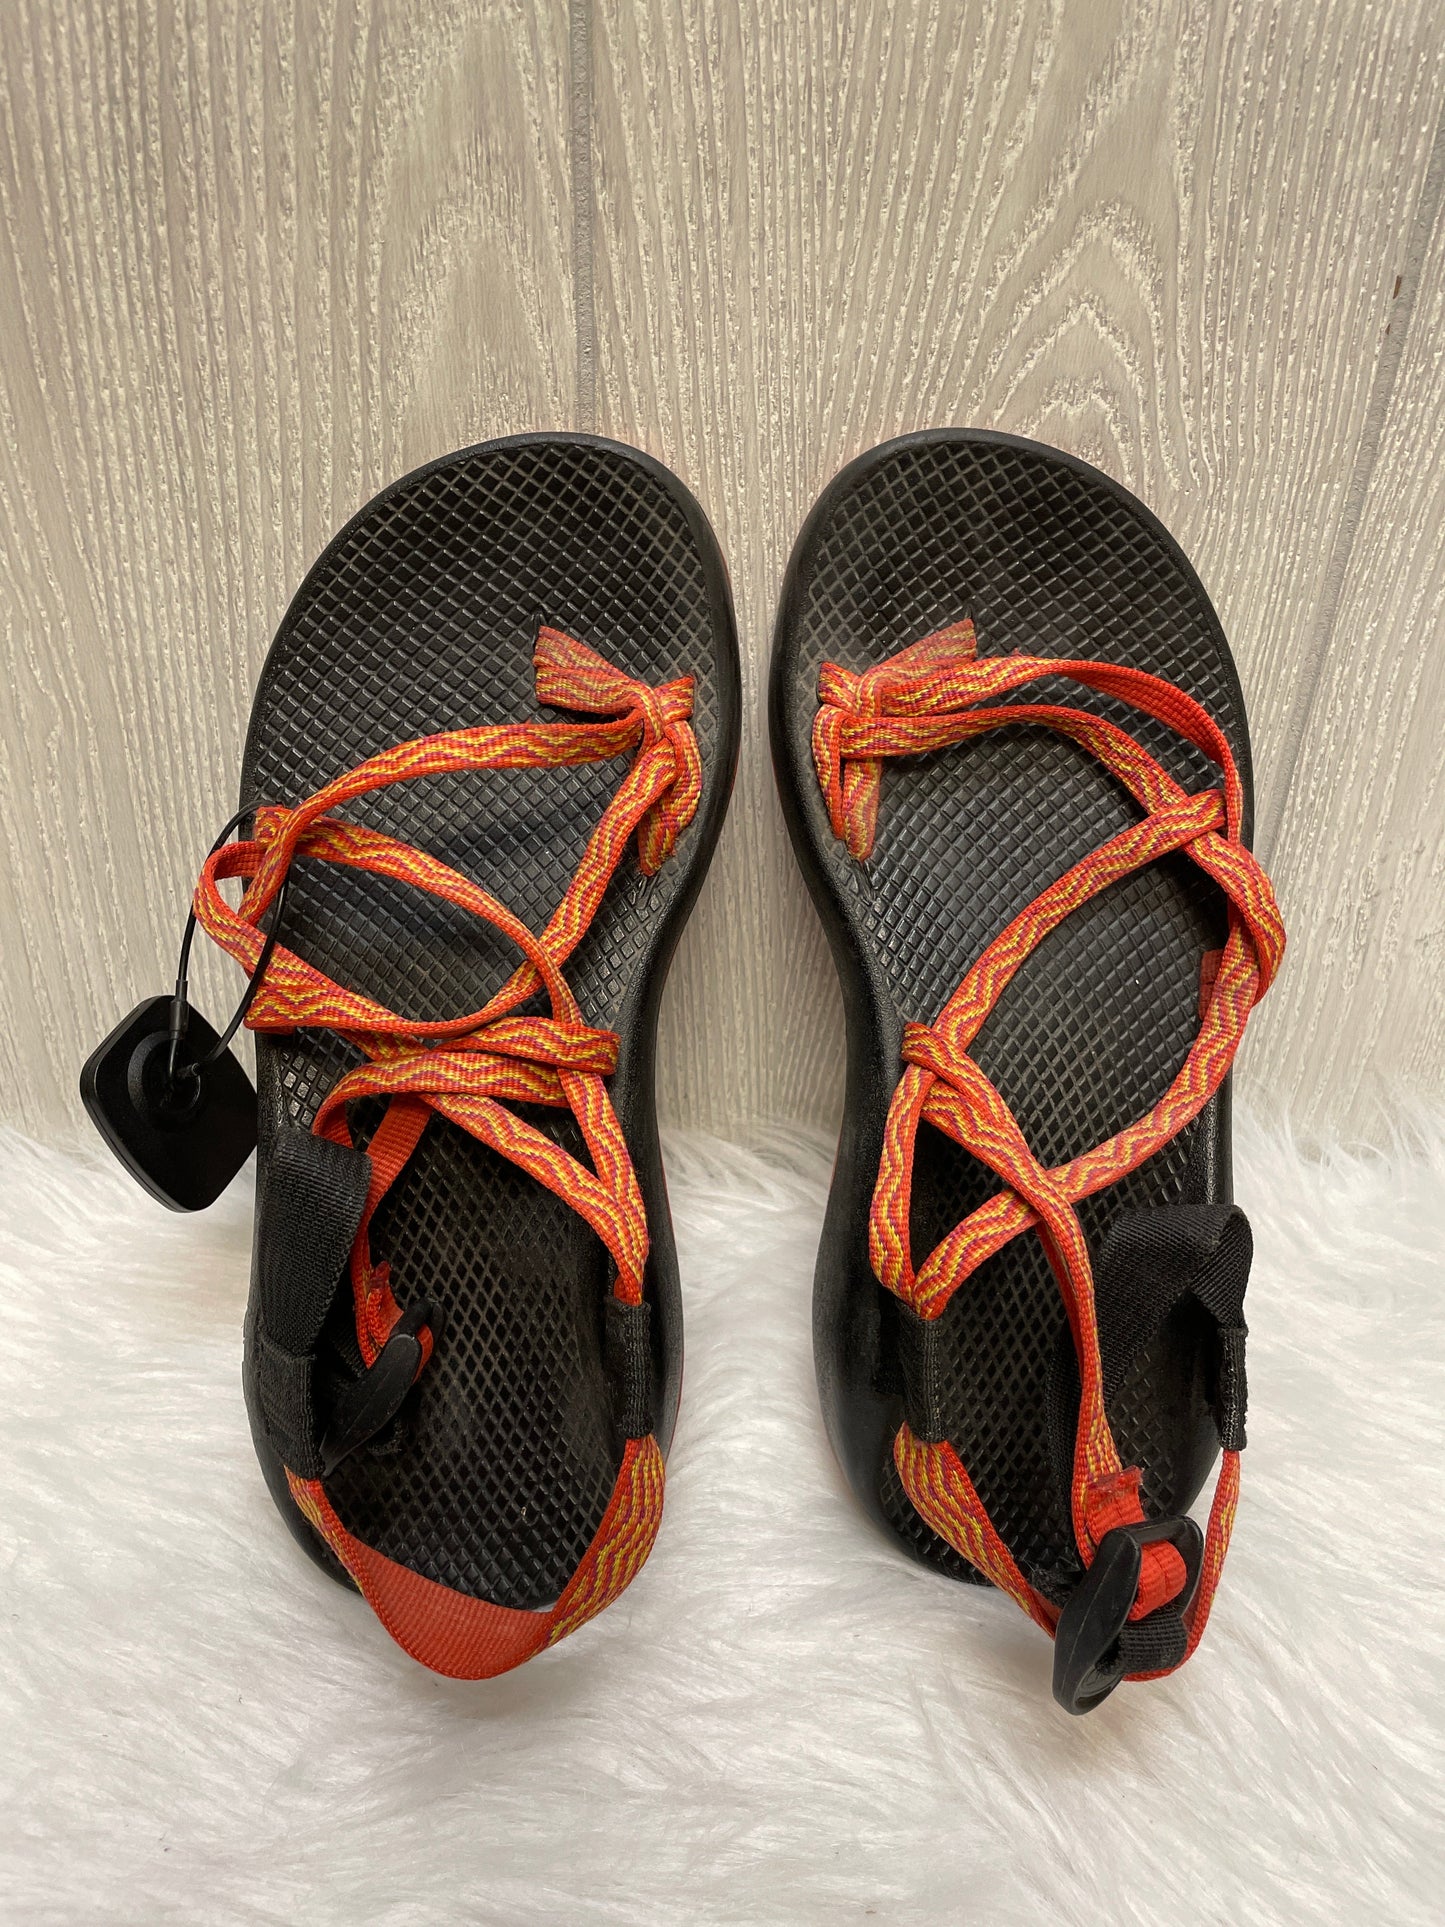 Black & Orange Sandals Sport Chacos, Size 8